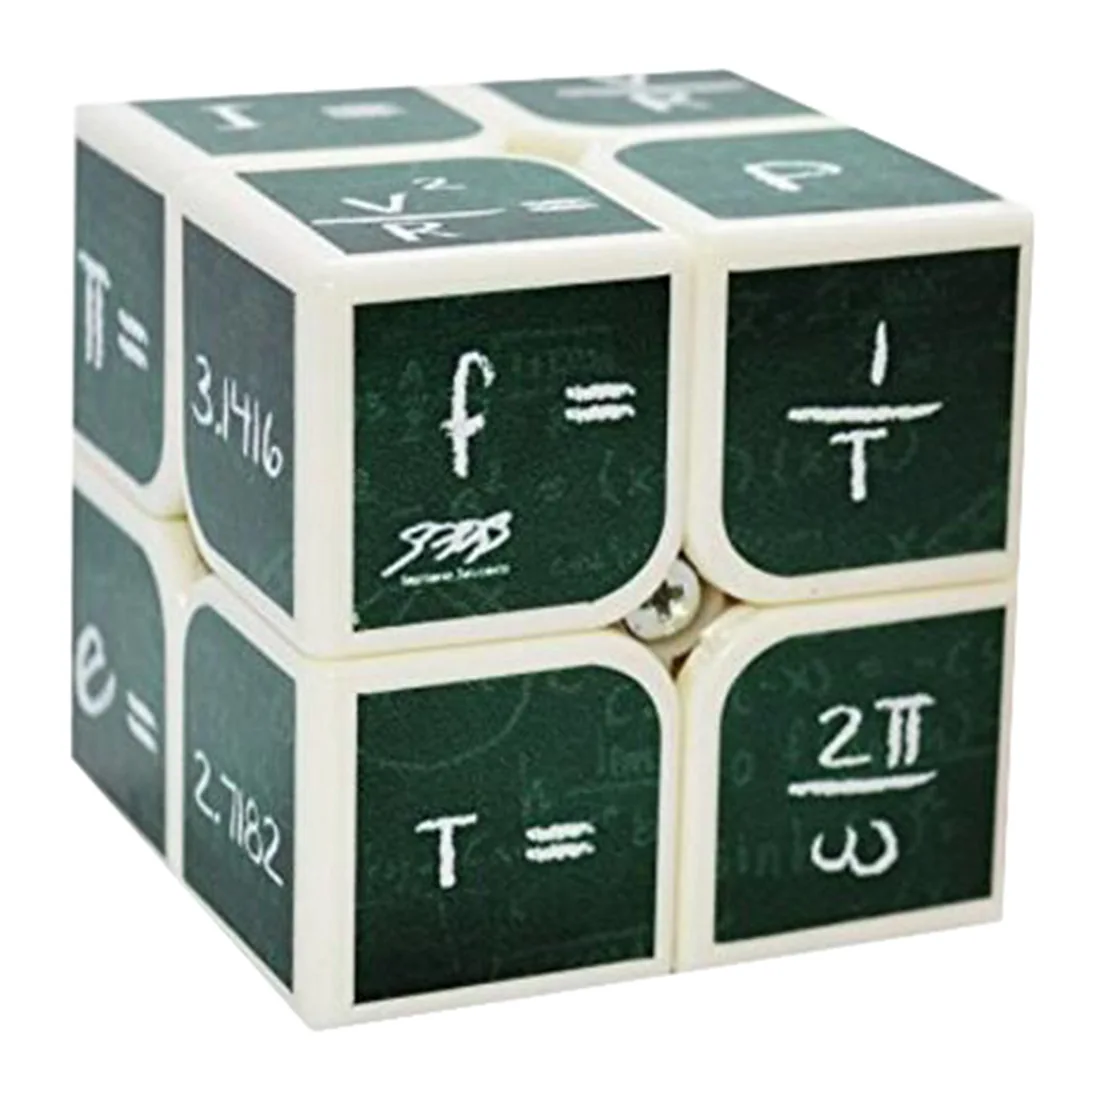 

2x2 Magic Puzzle Cube Personalização Topo de Gama Cube Children's Gifts Educational Toys2x2 Cubo Mágico Profissional Fidge Toy